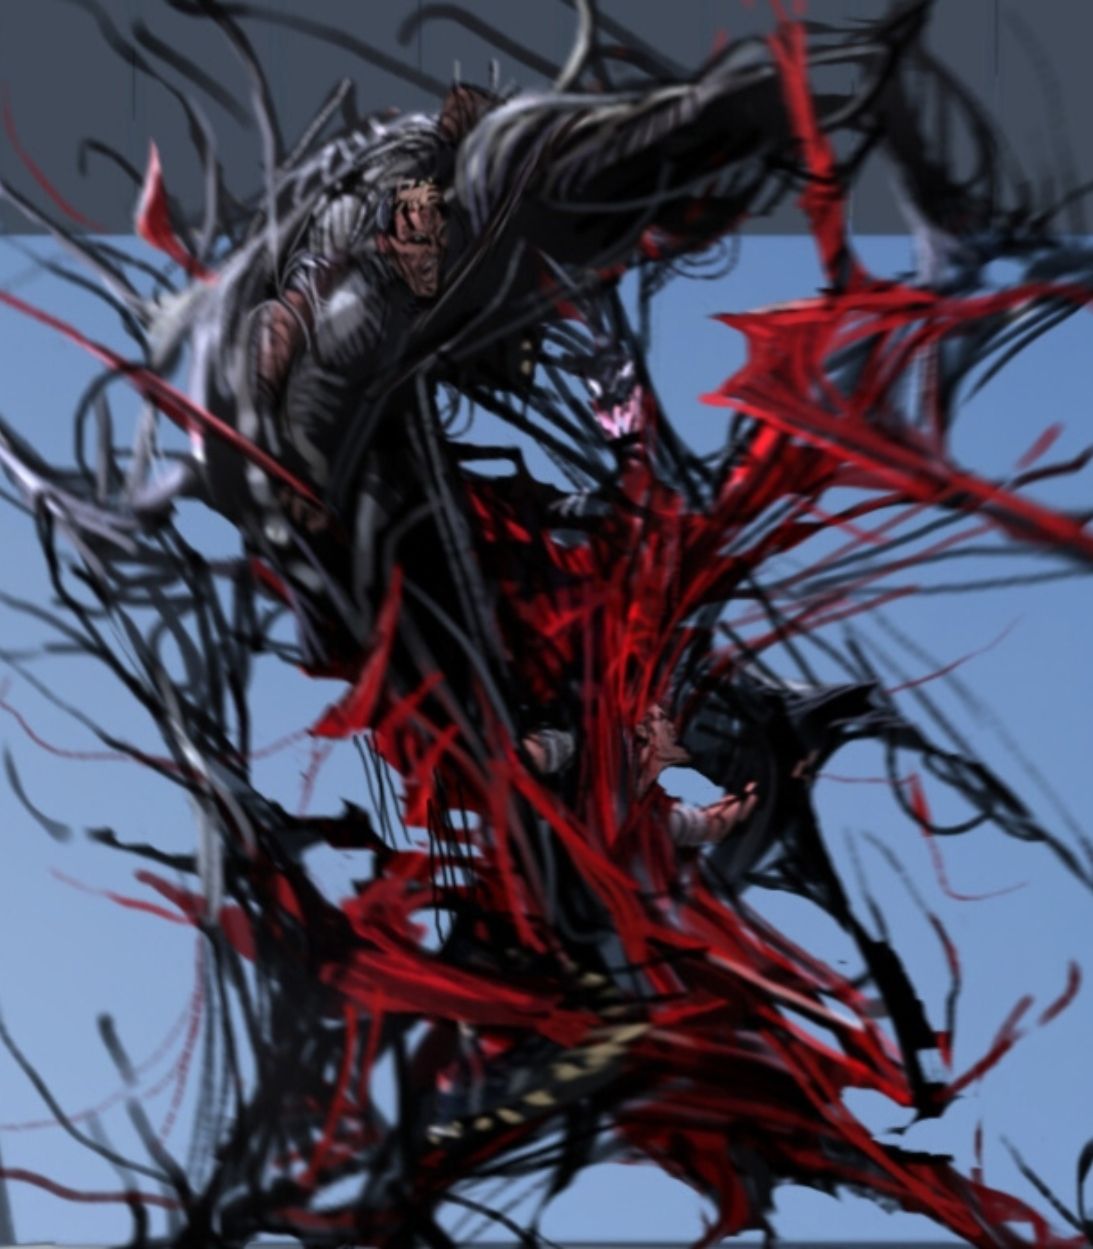 Paolo-Giandoso-Venom-Carnage-Concept-1093